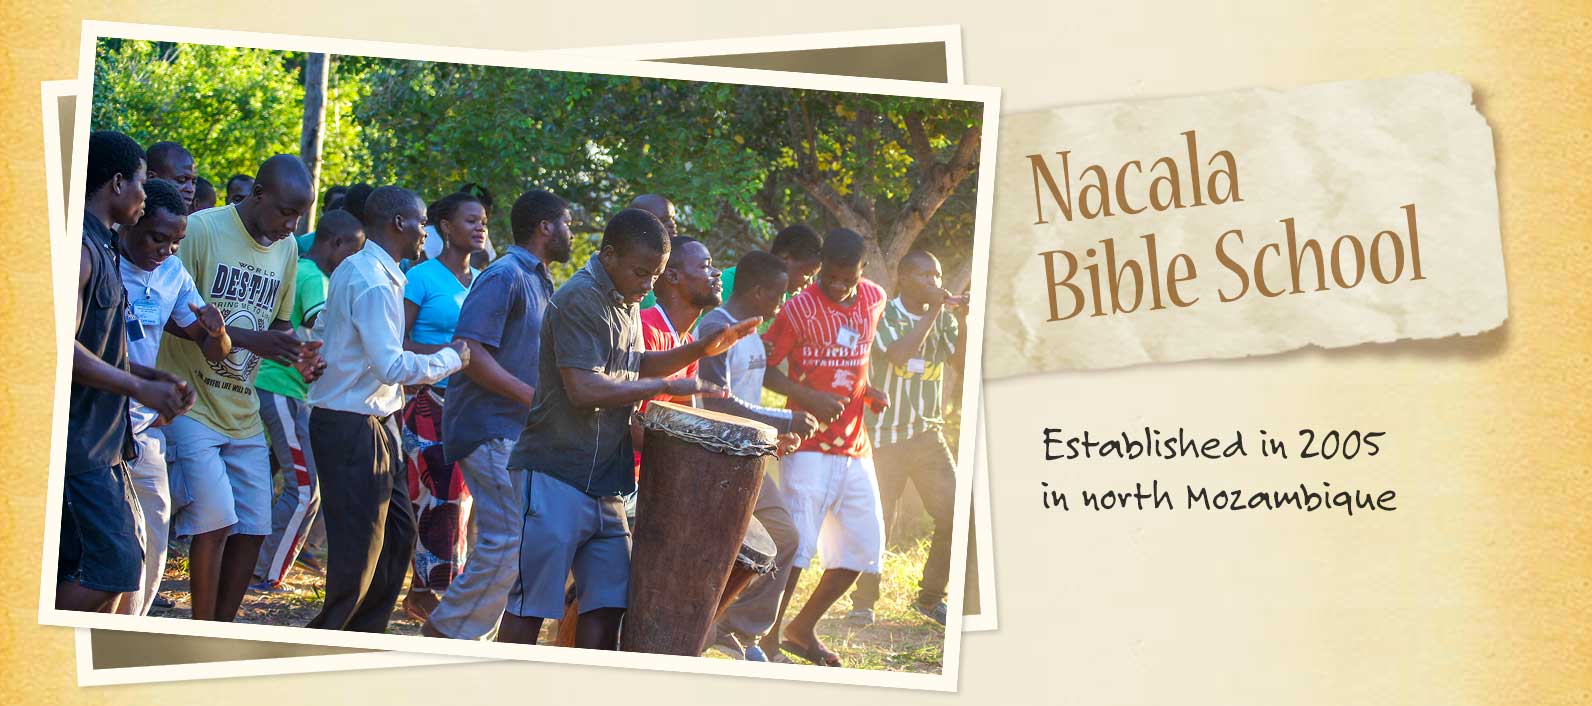 Nacala Bible School: Established in 2005